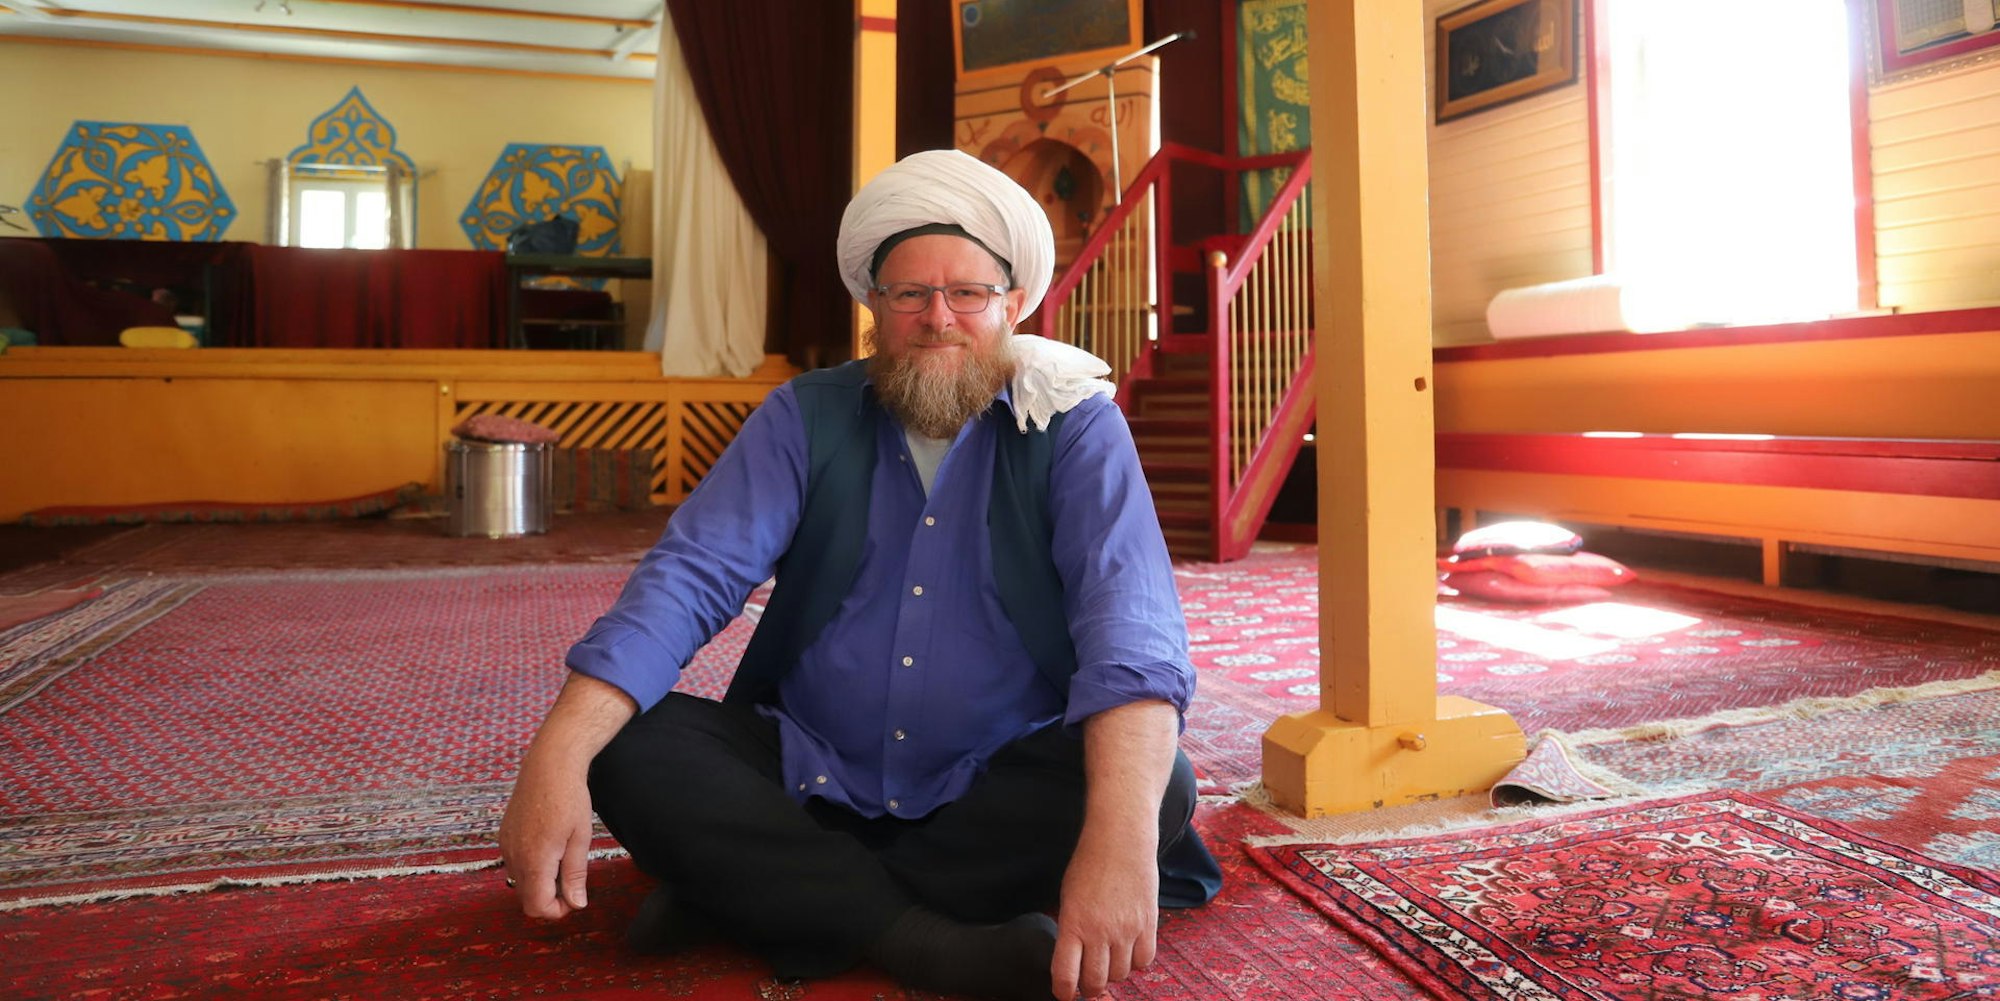 In der leeren Osmanischen Herberge in Sötenich, dem Zentrum der Sufis in Deutschland, sitzt Ahmad Adamek.